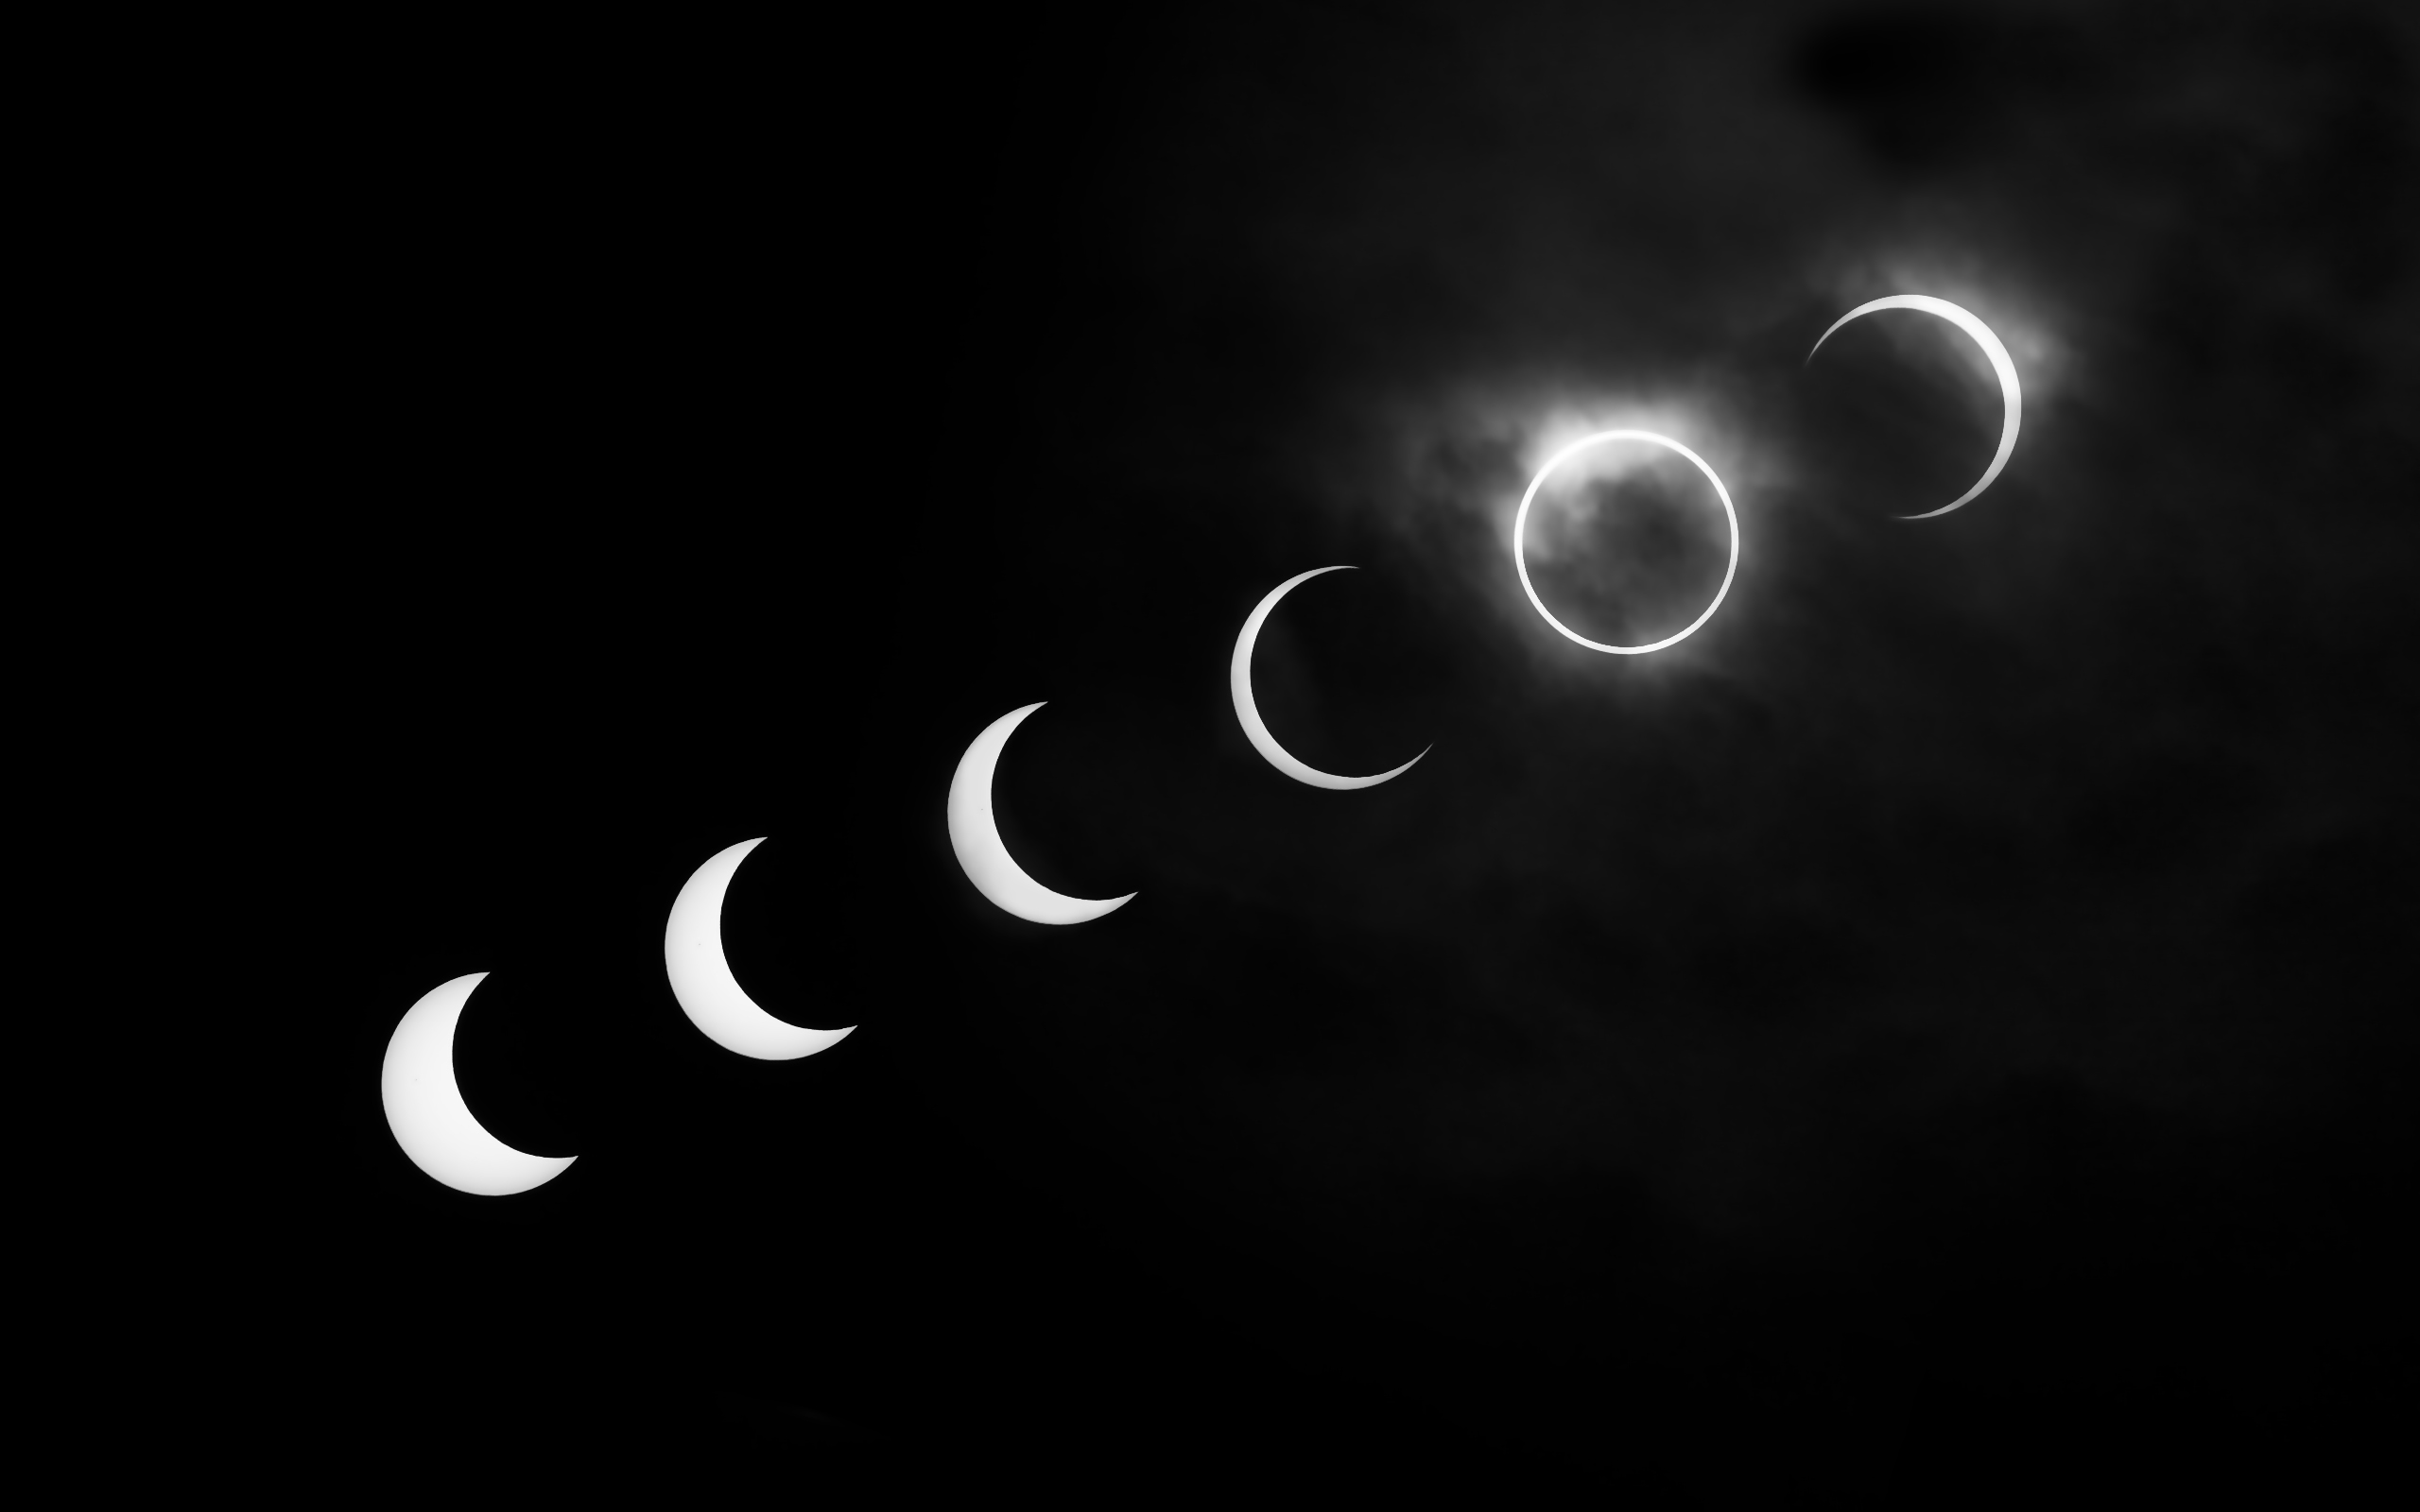 Solar eclipse black and white desktop wallpaper 2560x1600